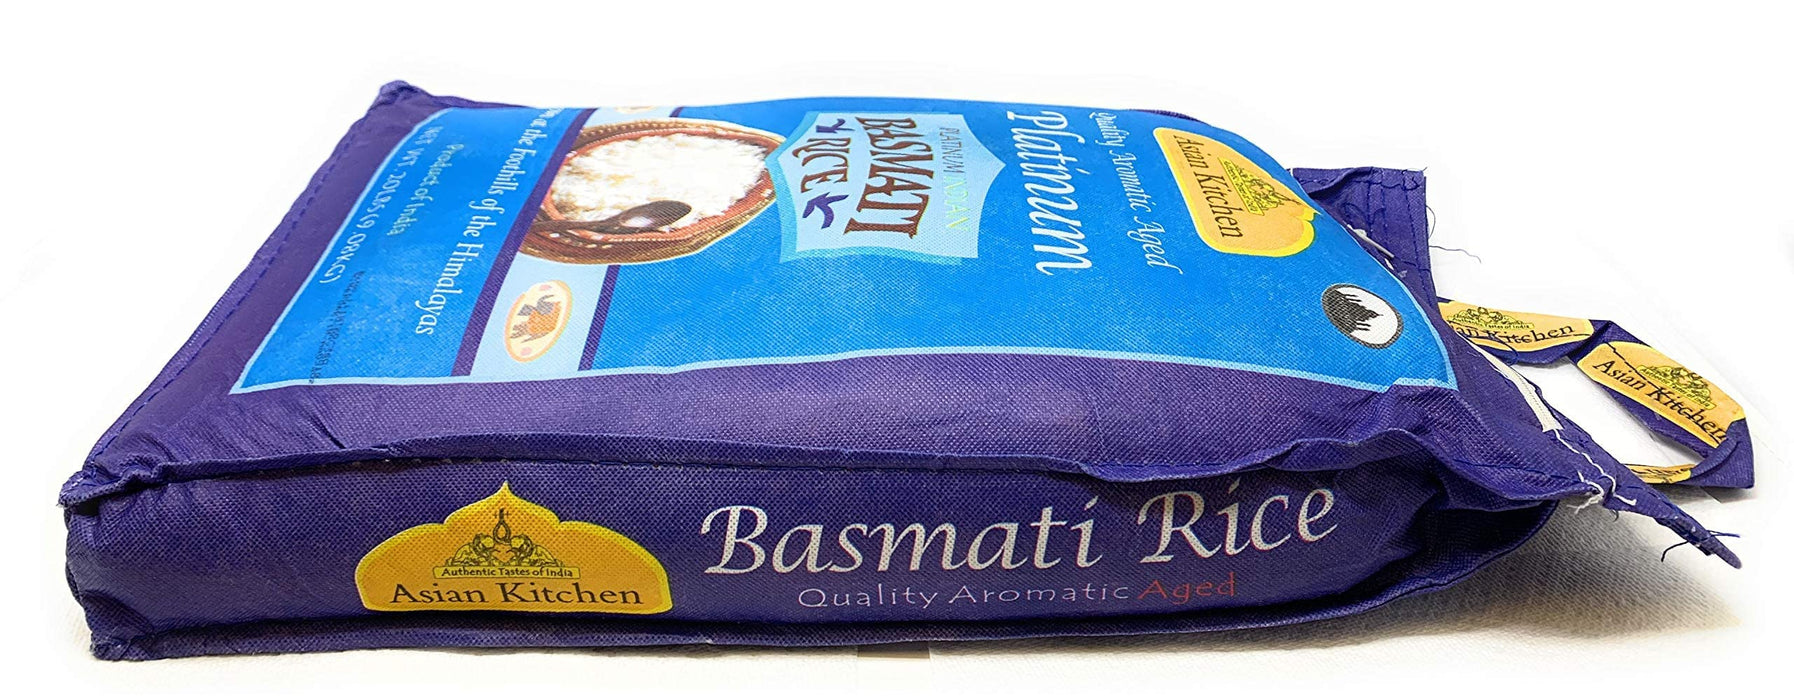 Asian Kitchen Platinum White Basmati Rice Extra Long Aged 20lbs (9.08kg) ~ All Natural | Gluten Friendly | Vegan | Indian Origin | Export Quality